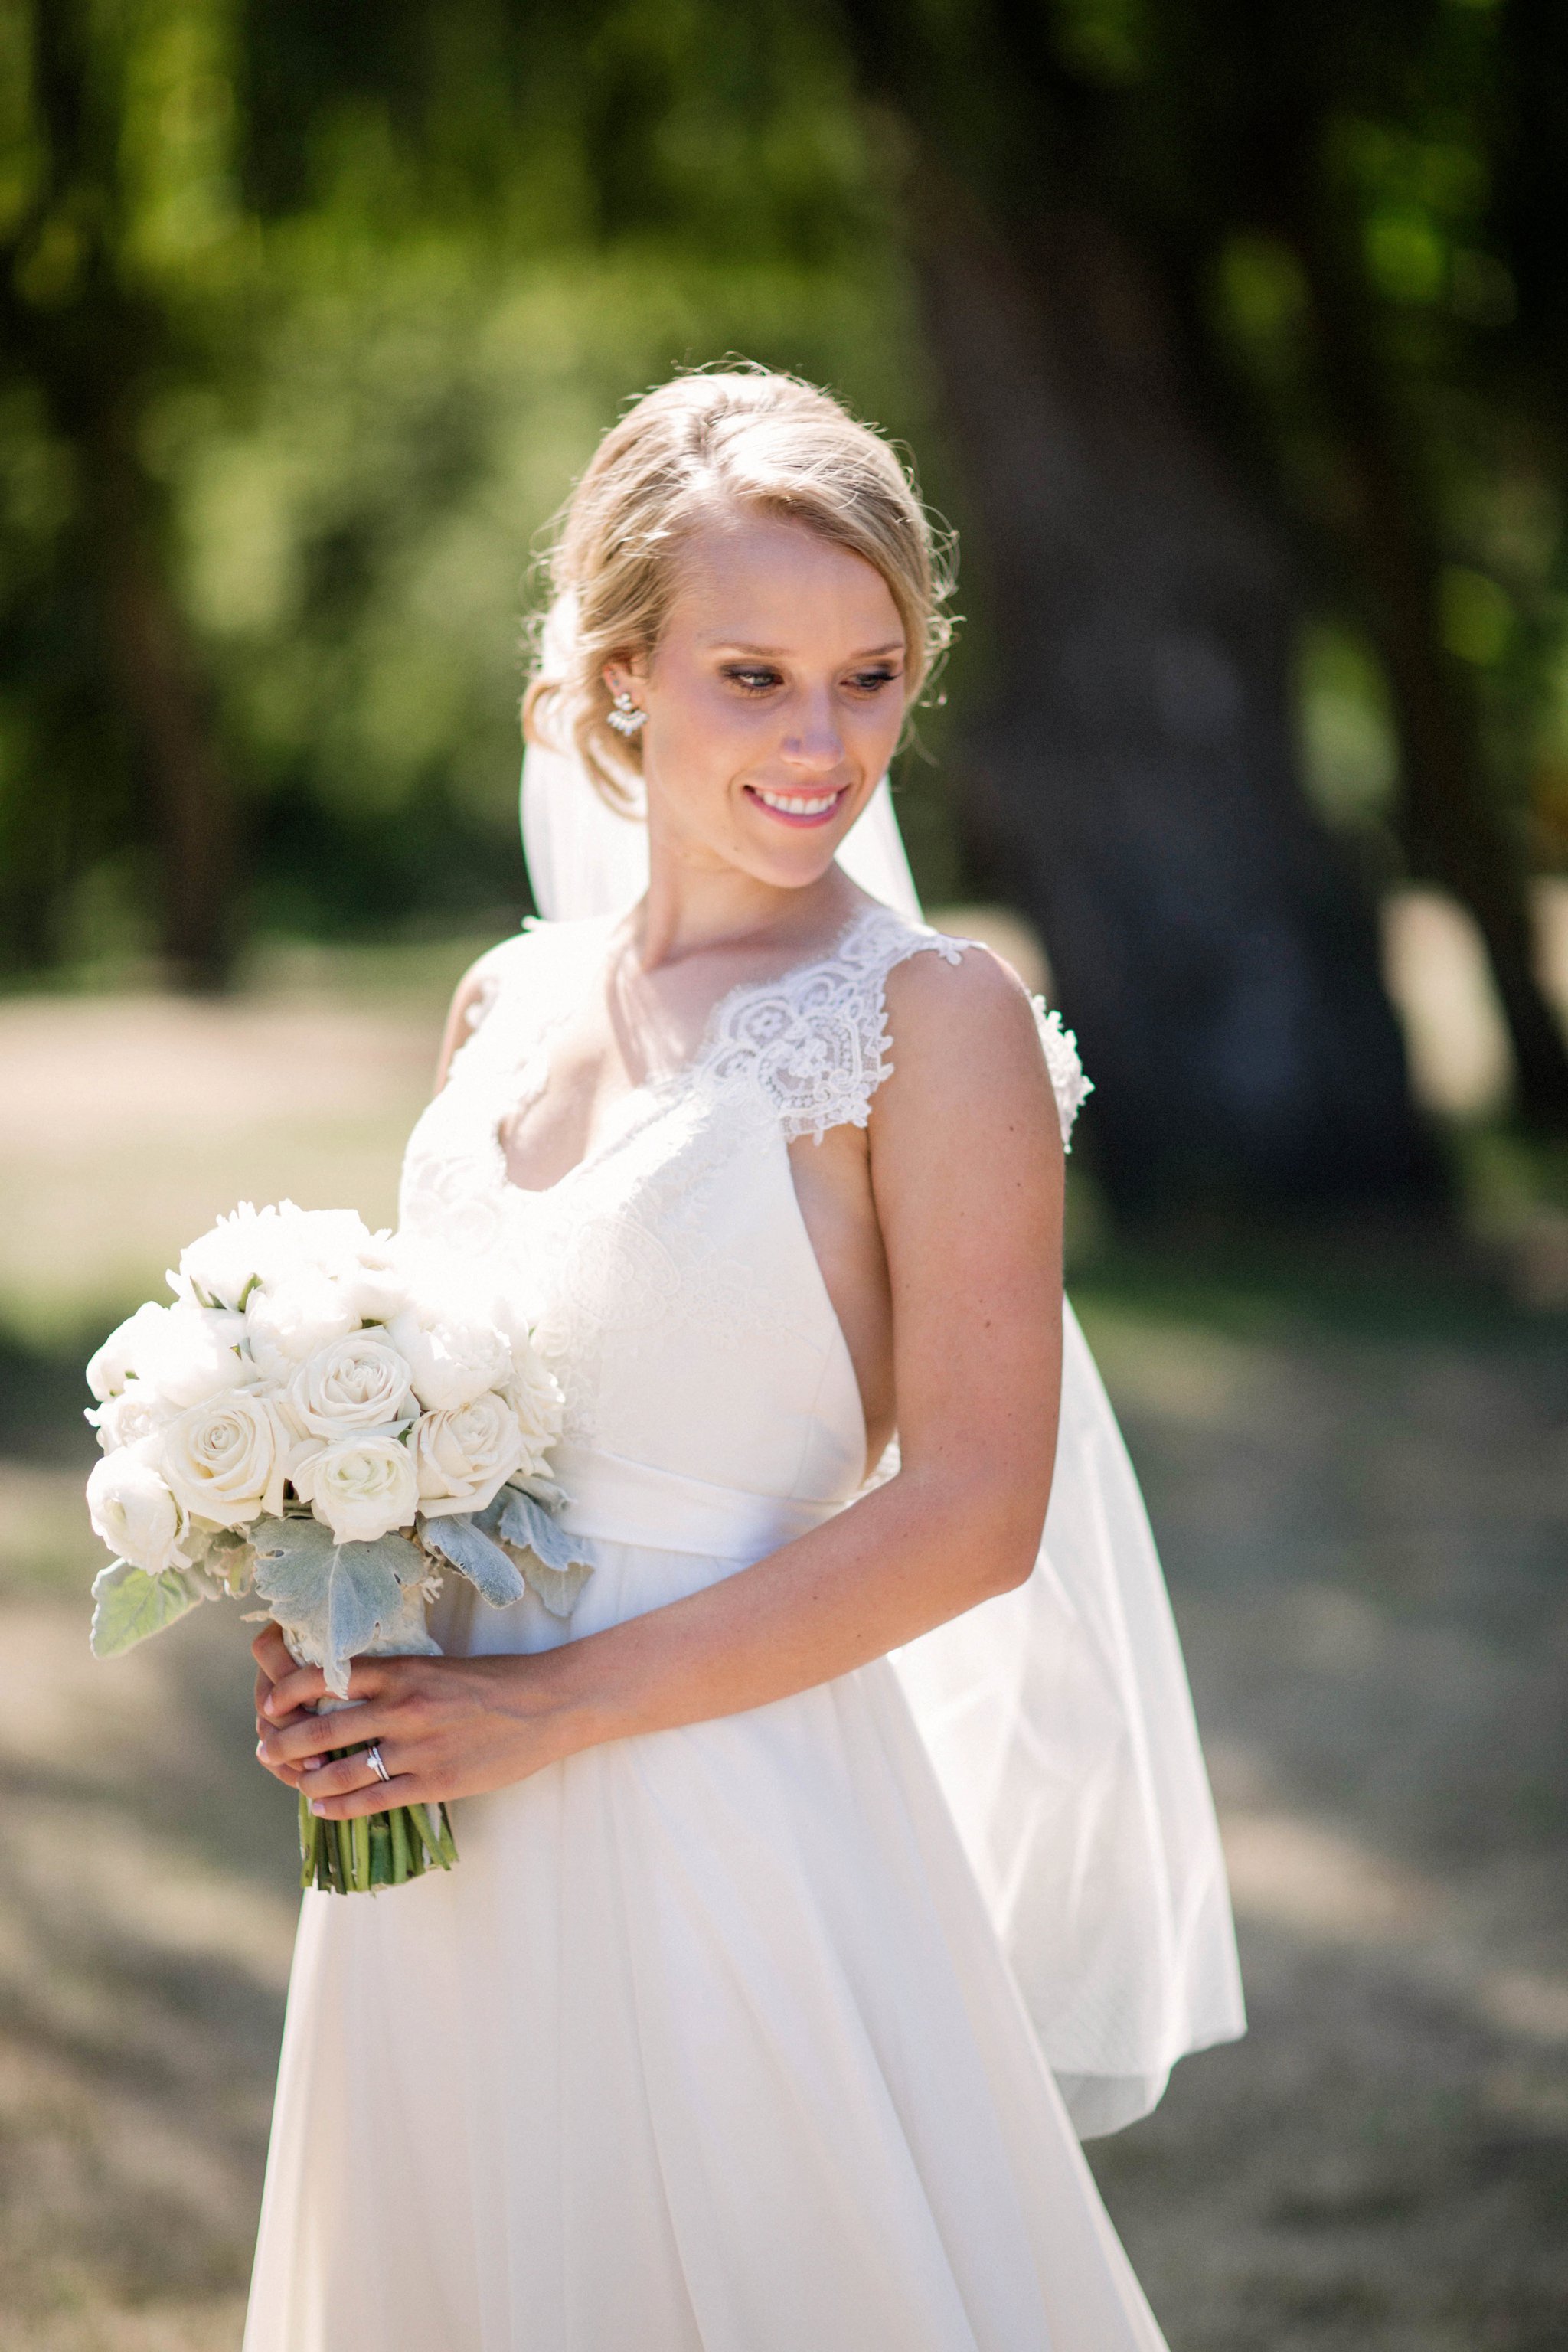 Sioux Falls Wedding Photos | Destination Photographer | Felicia The Photographer | Mary Jo Wegner Arboretum | Glowing Bride | Truvelle Jordan | Dusty Miller and White bouquet